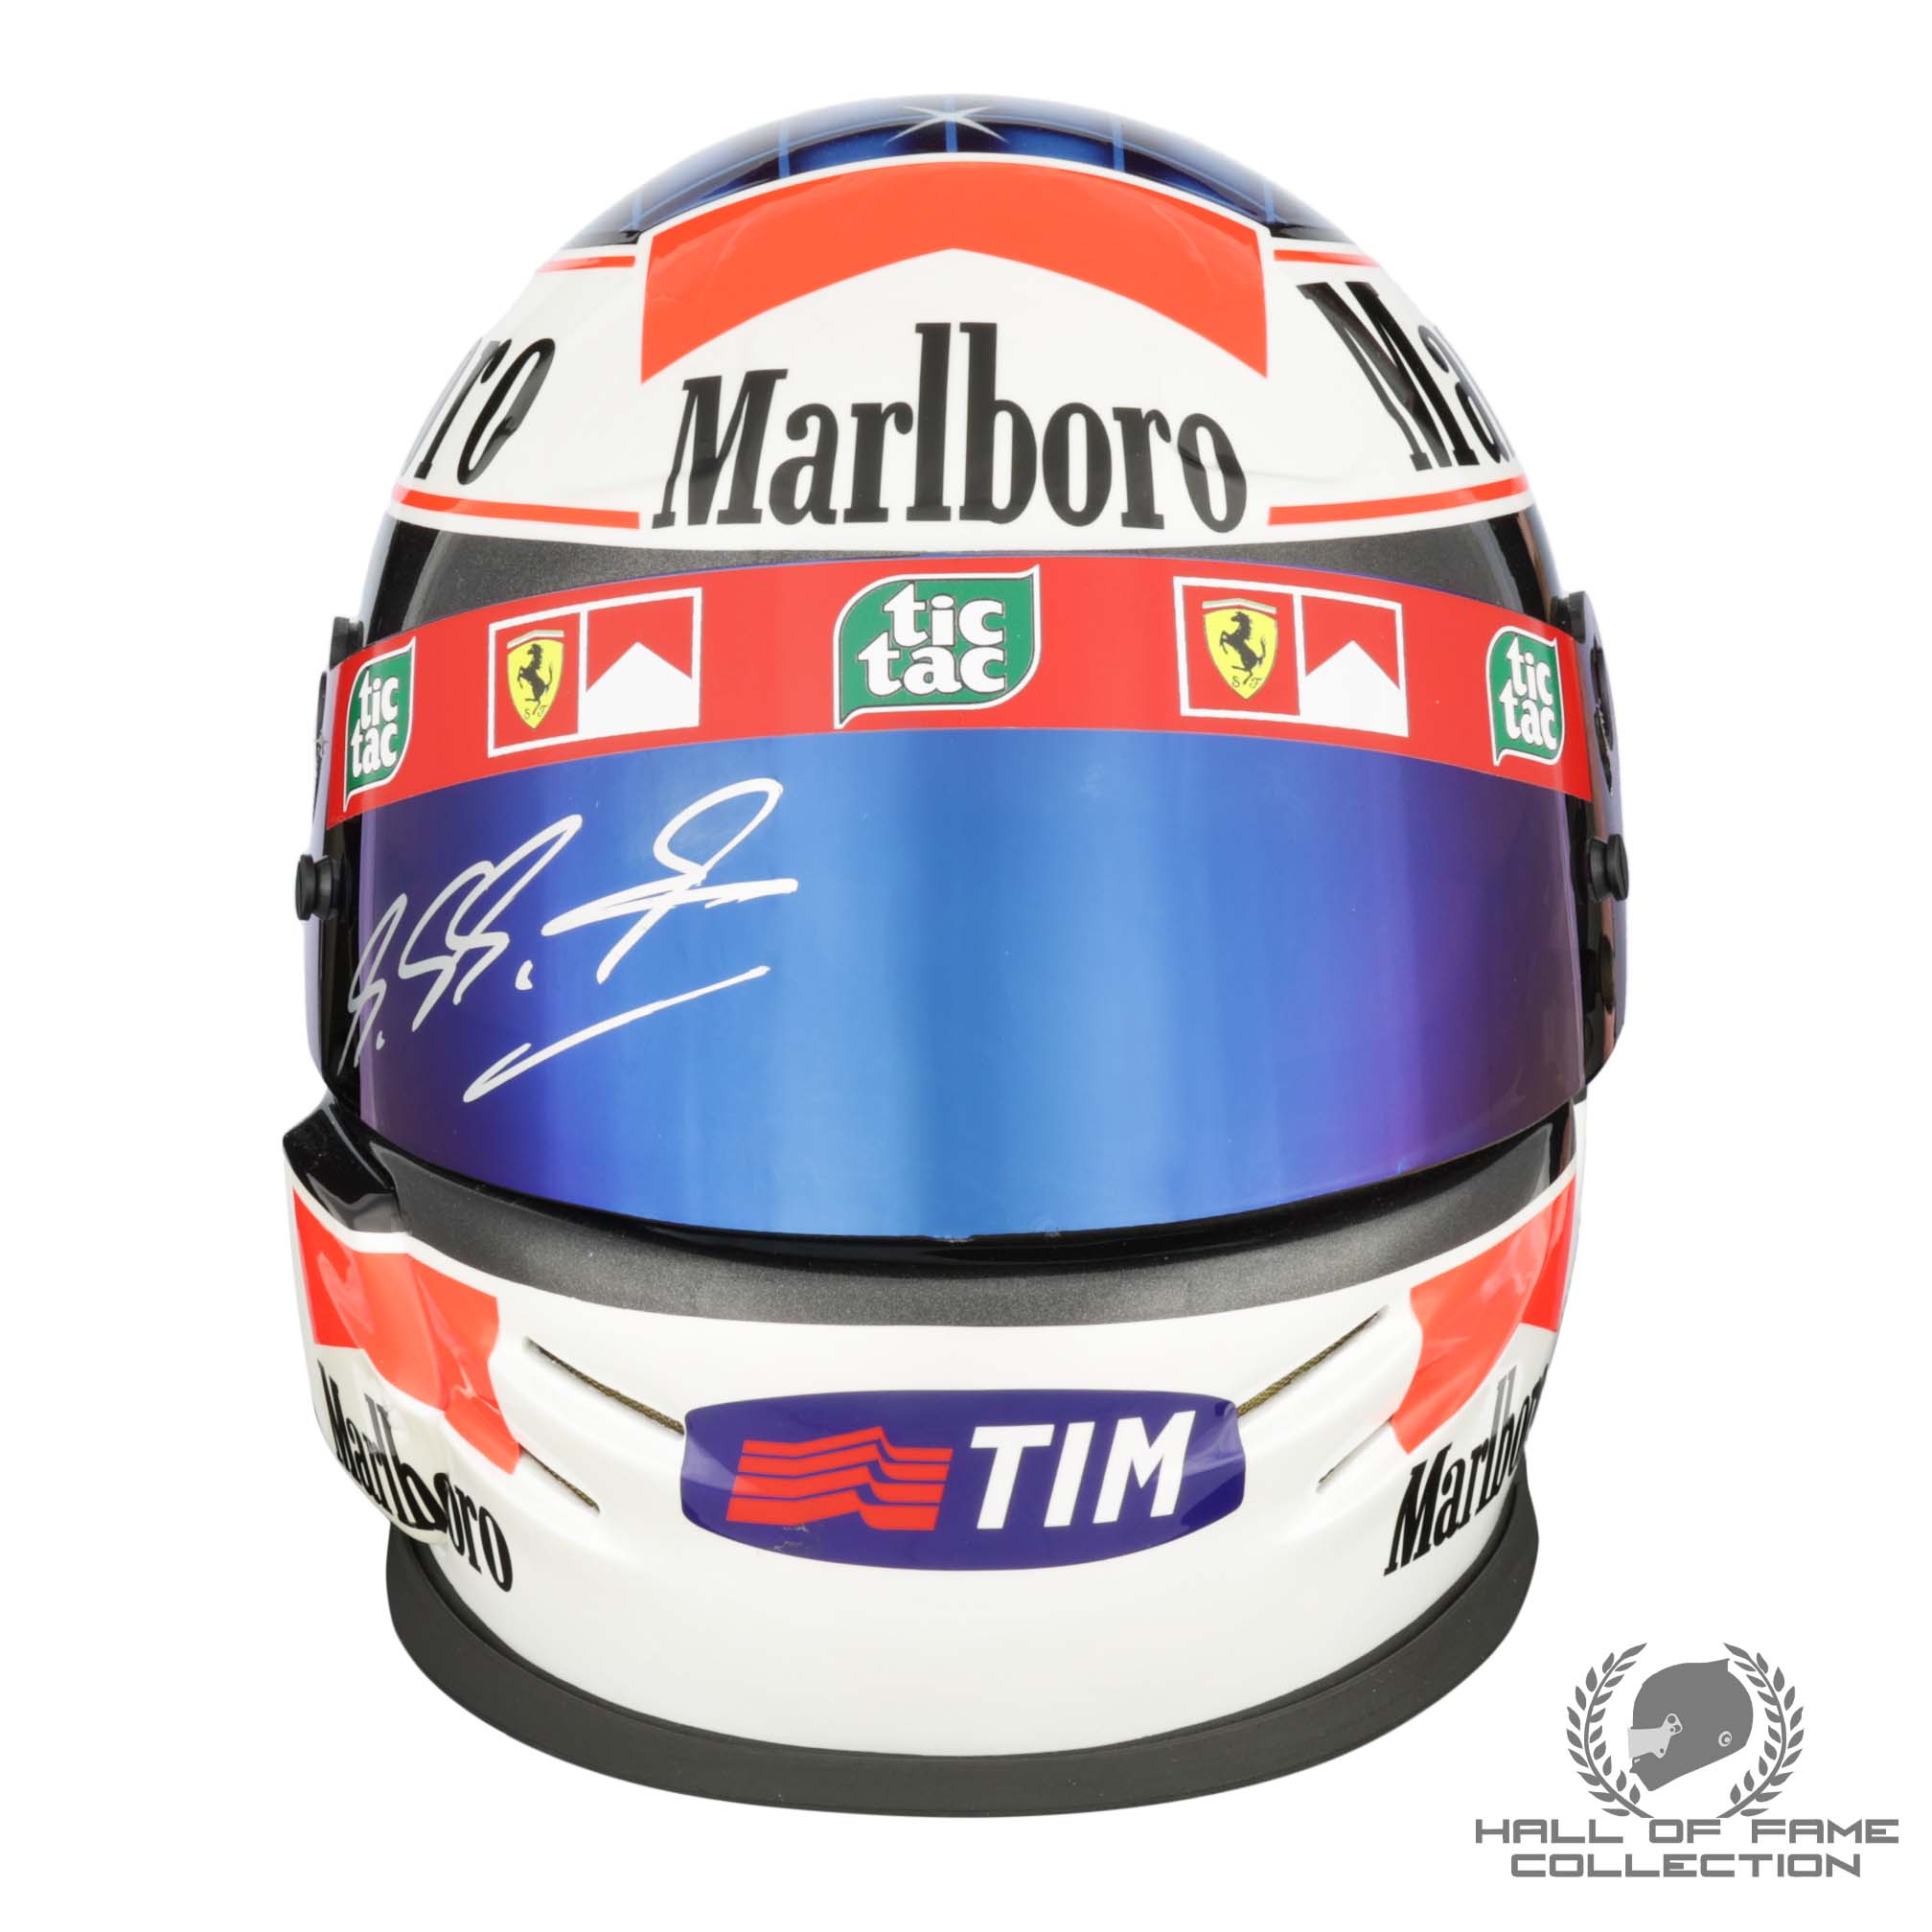 2000 Michael Schumacher Signed San Marino GP Win Scuderia Ferrari Limited Edition 33/50 Bell Series Replica F1 Helmet